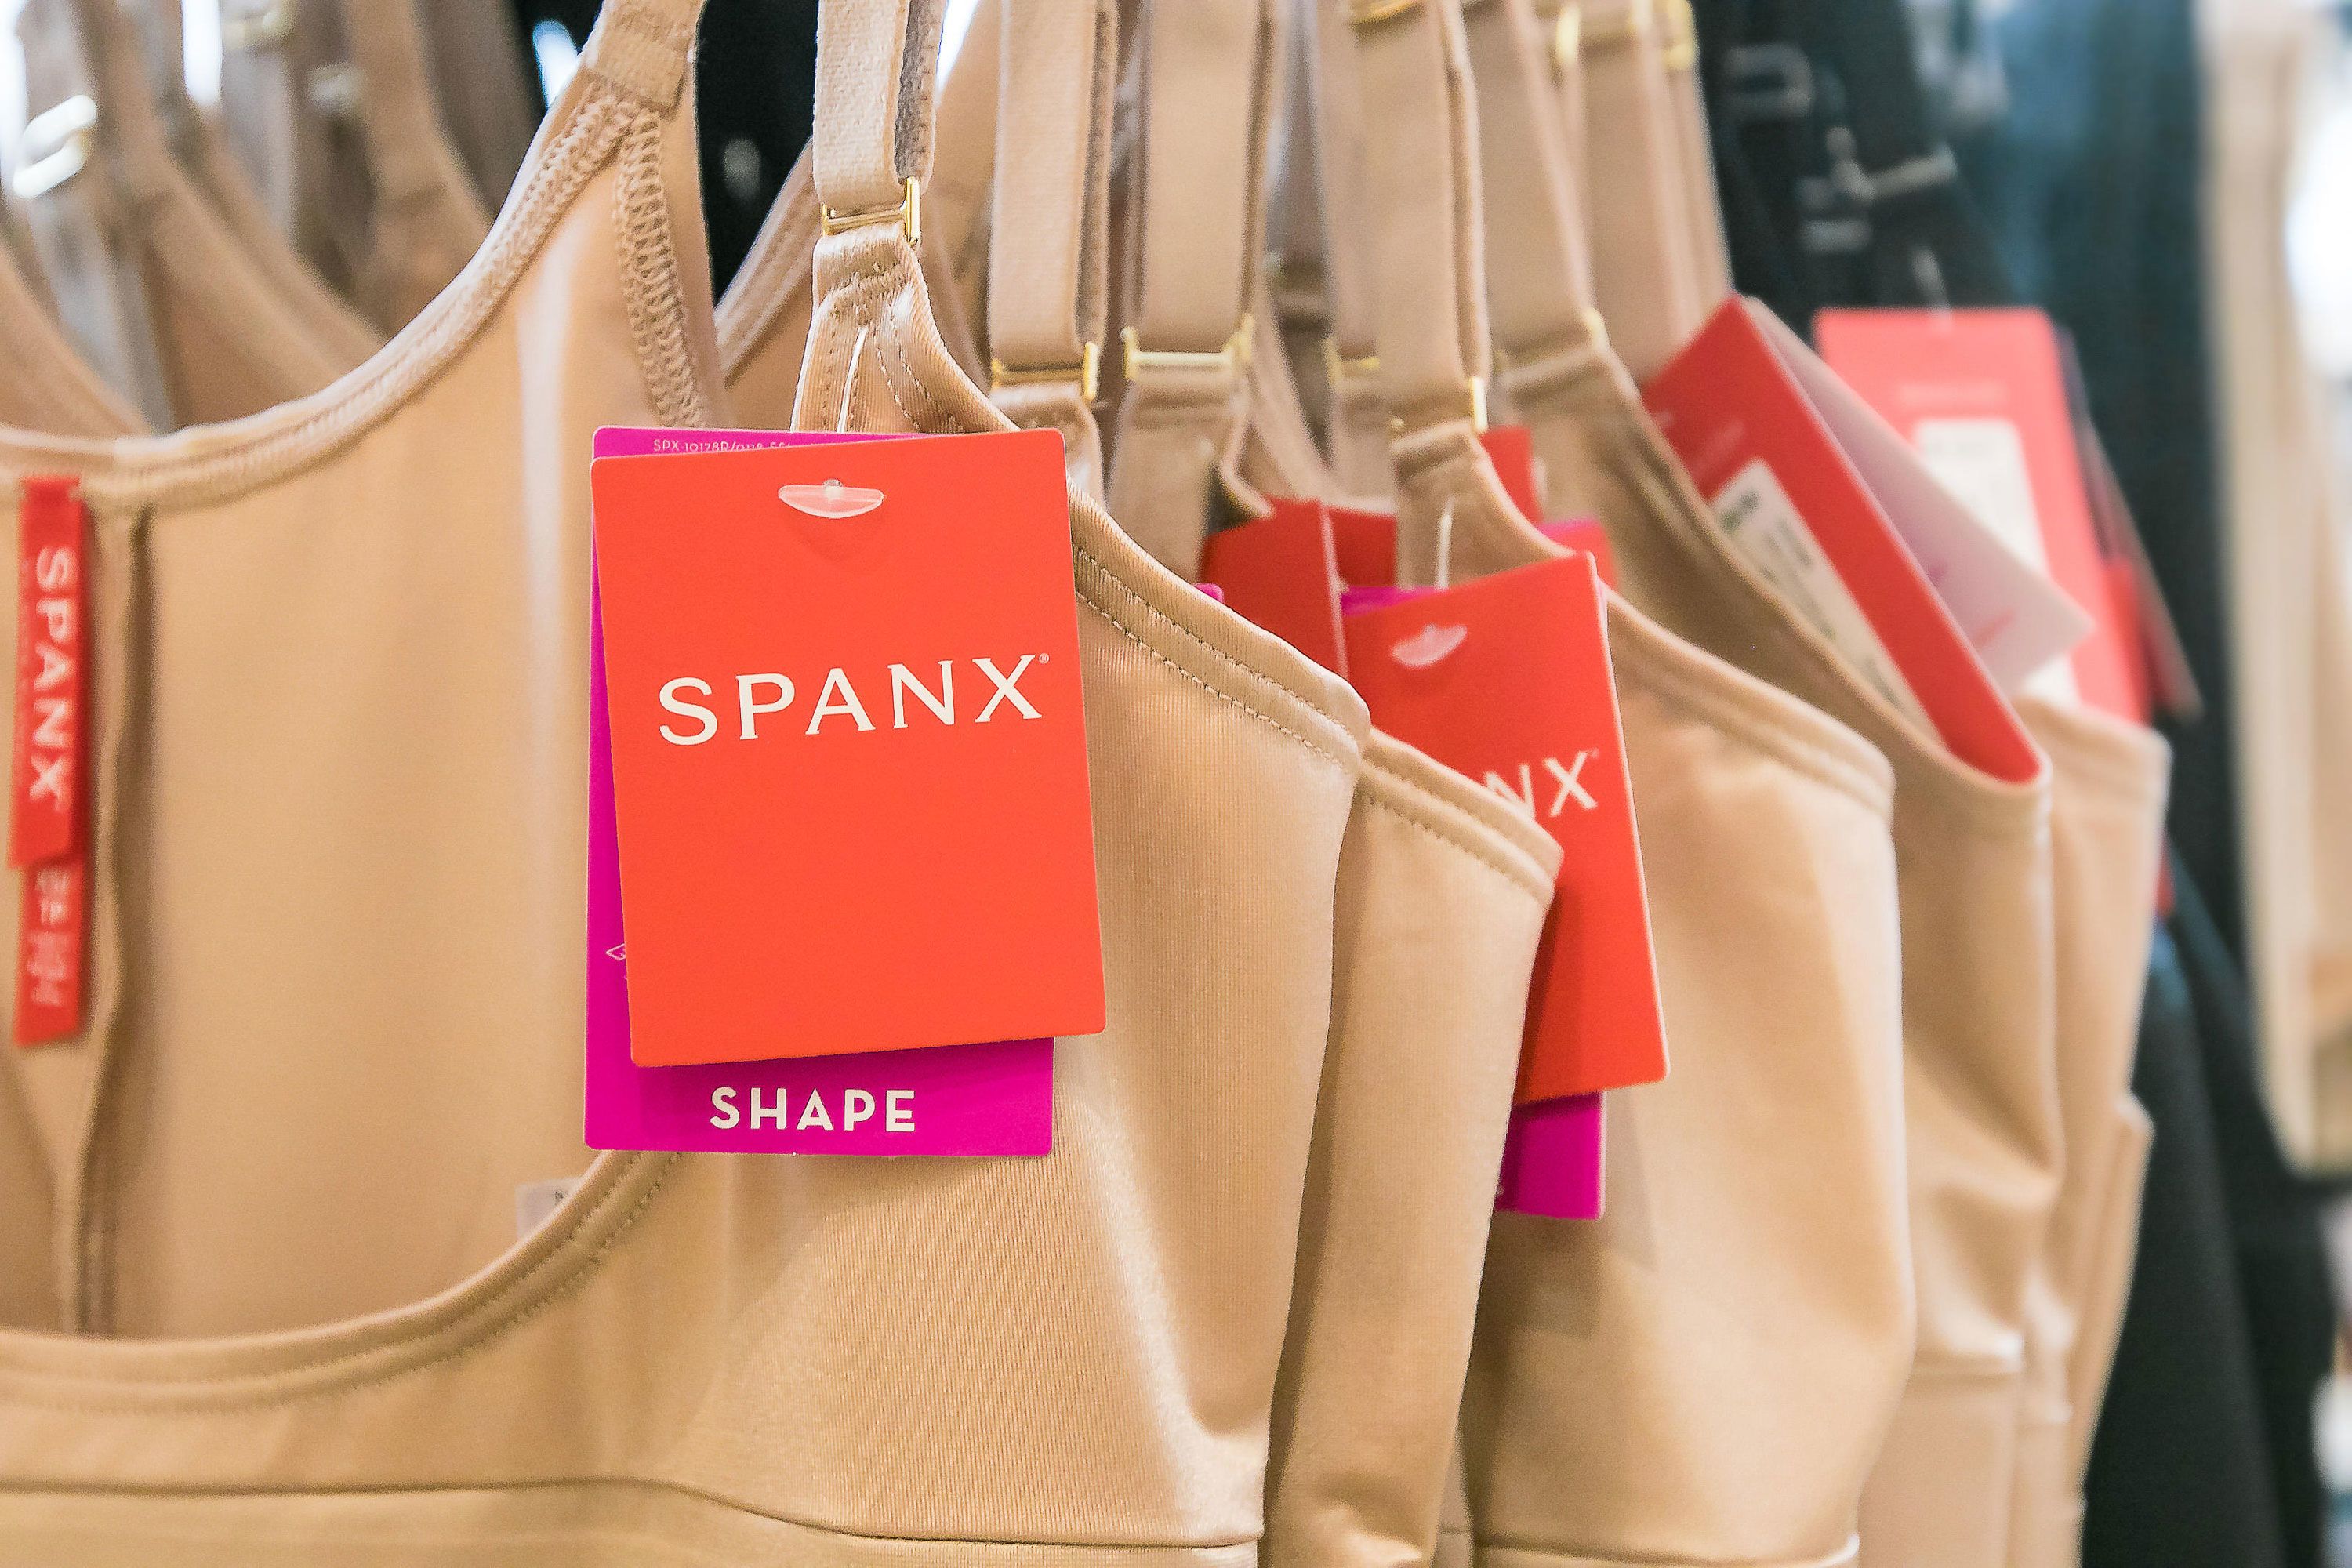 Spanx, the shapewear brand, valued at $1.2 billion in Blackstone